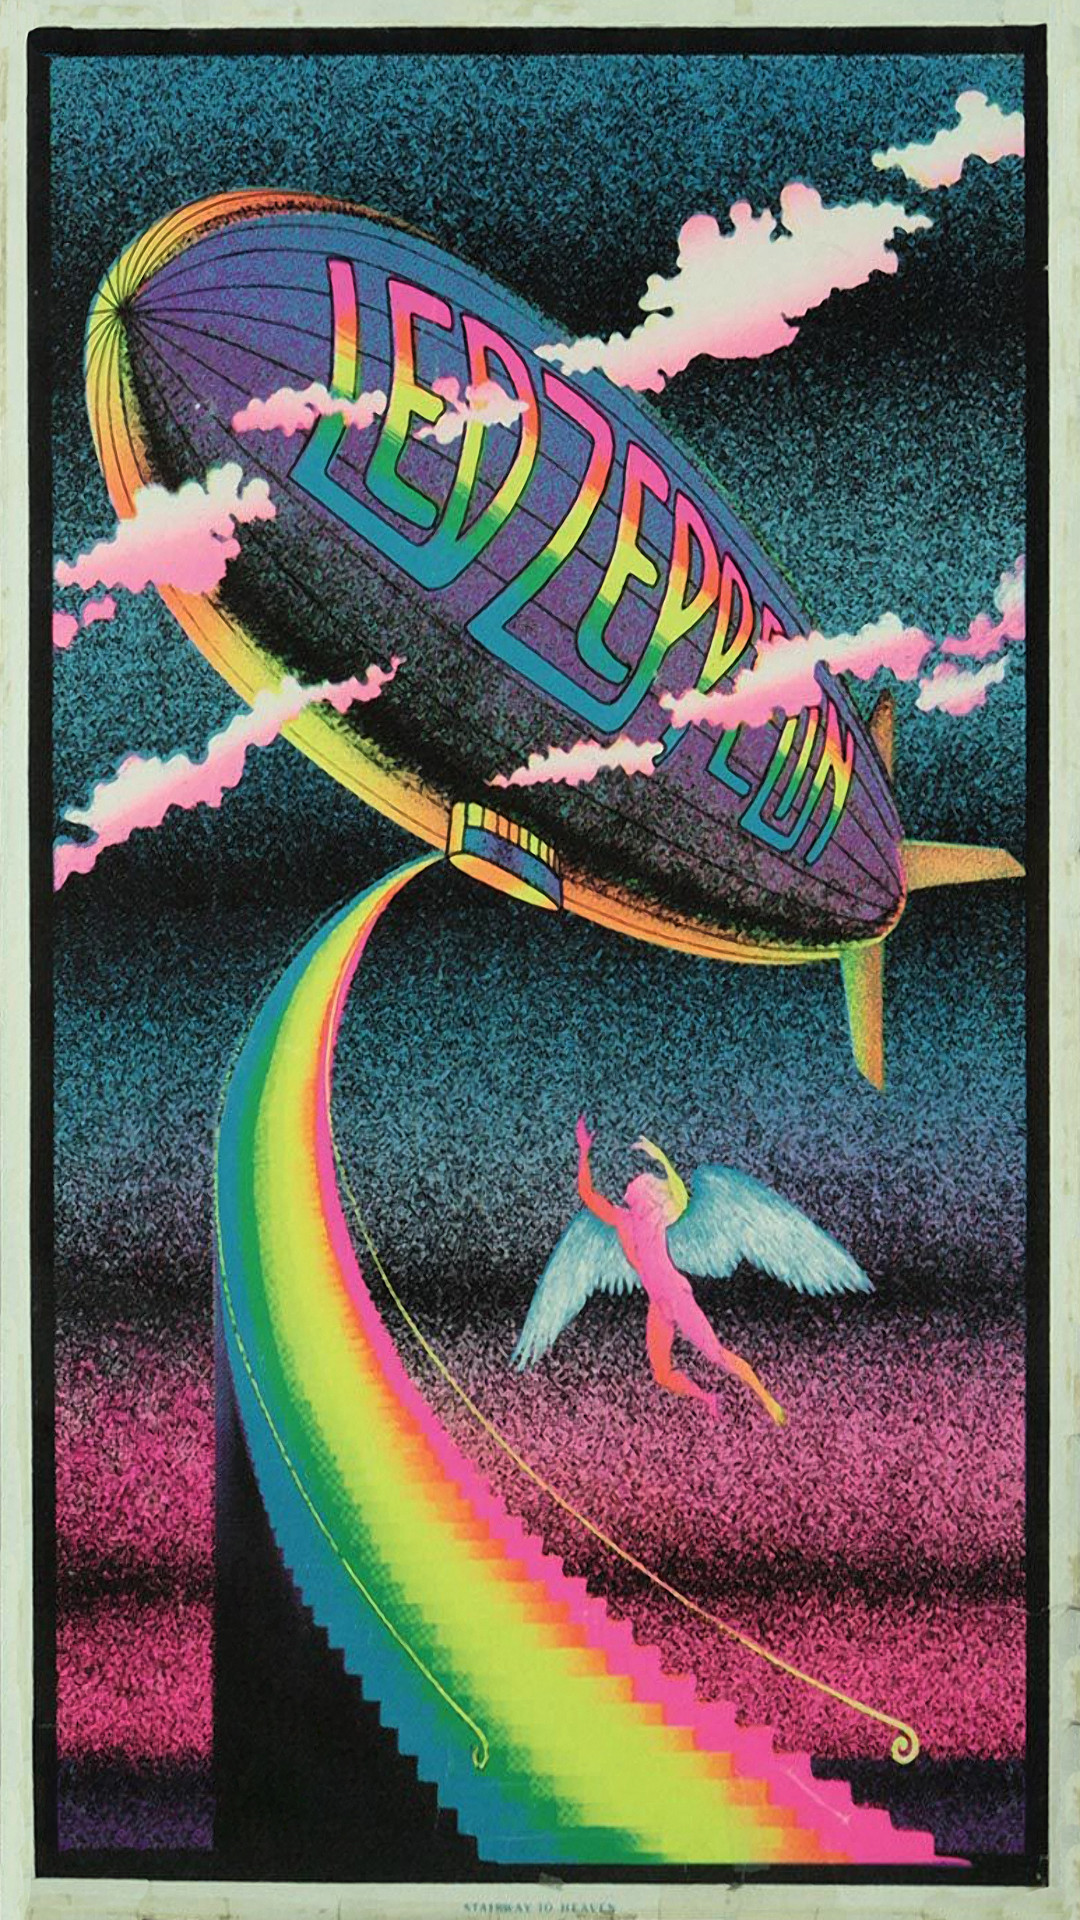 Led Zeppelin iPhone Wallpaper (46+ images)